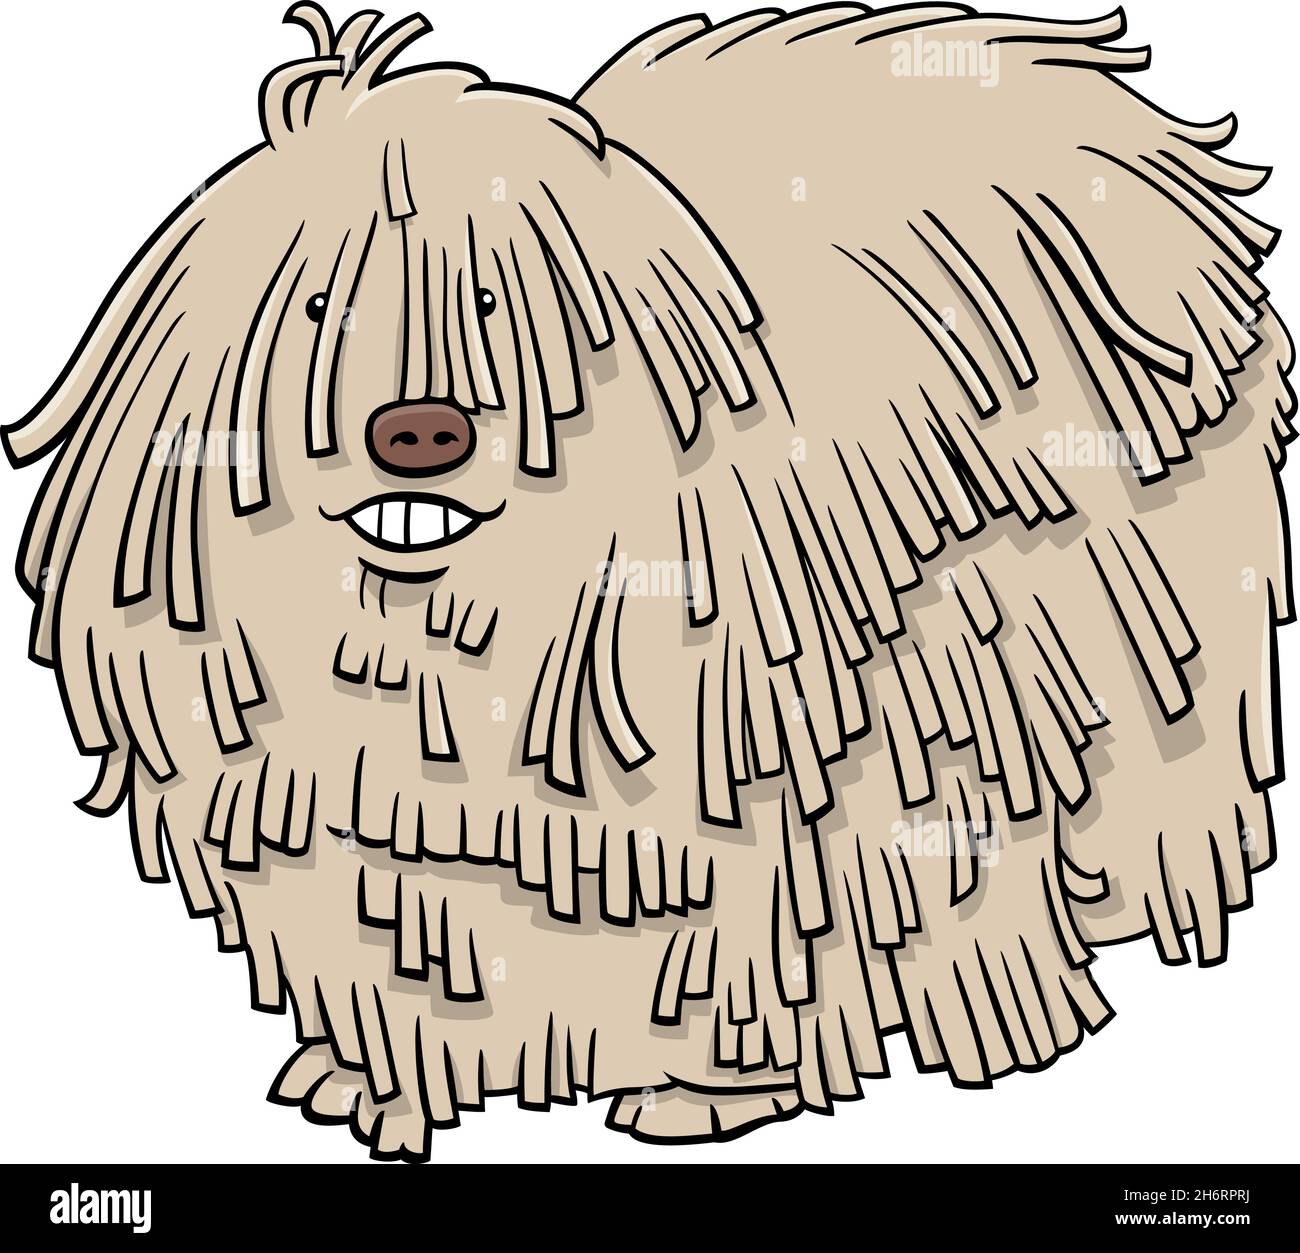 Cartoon illustration of komondor or Hungarian sheepdog purebred dog animal character Stock Vector